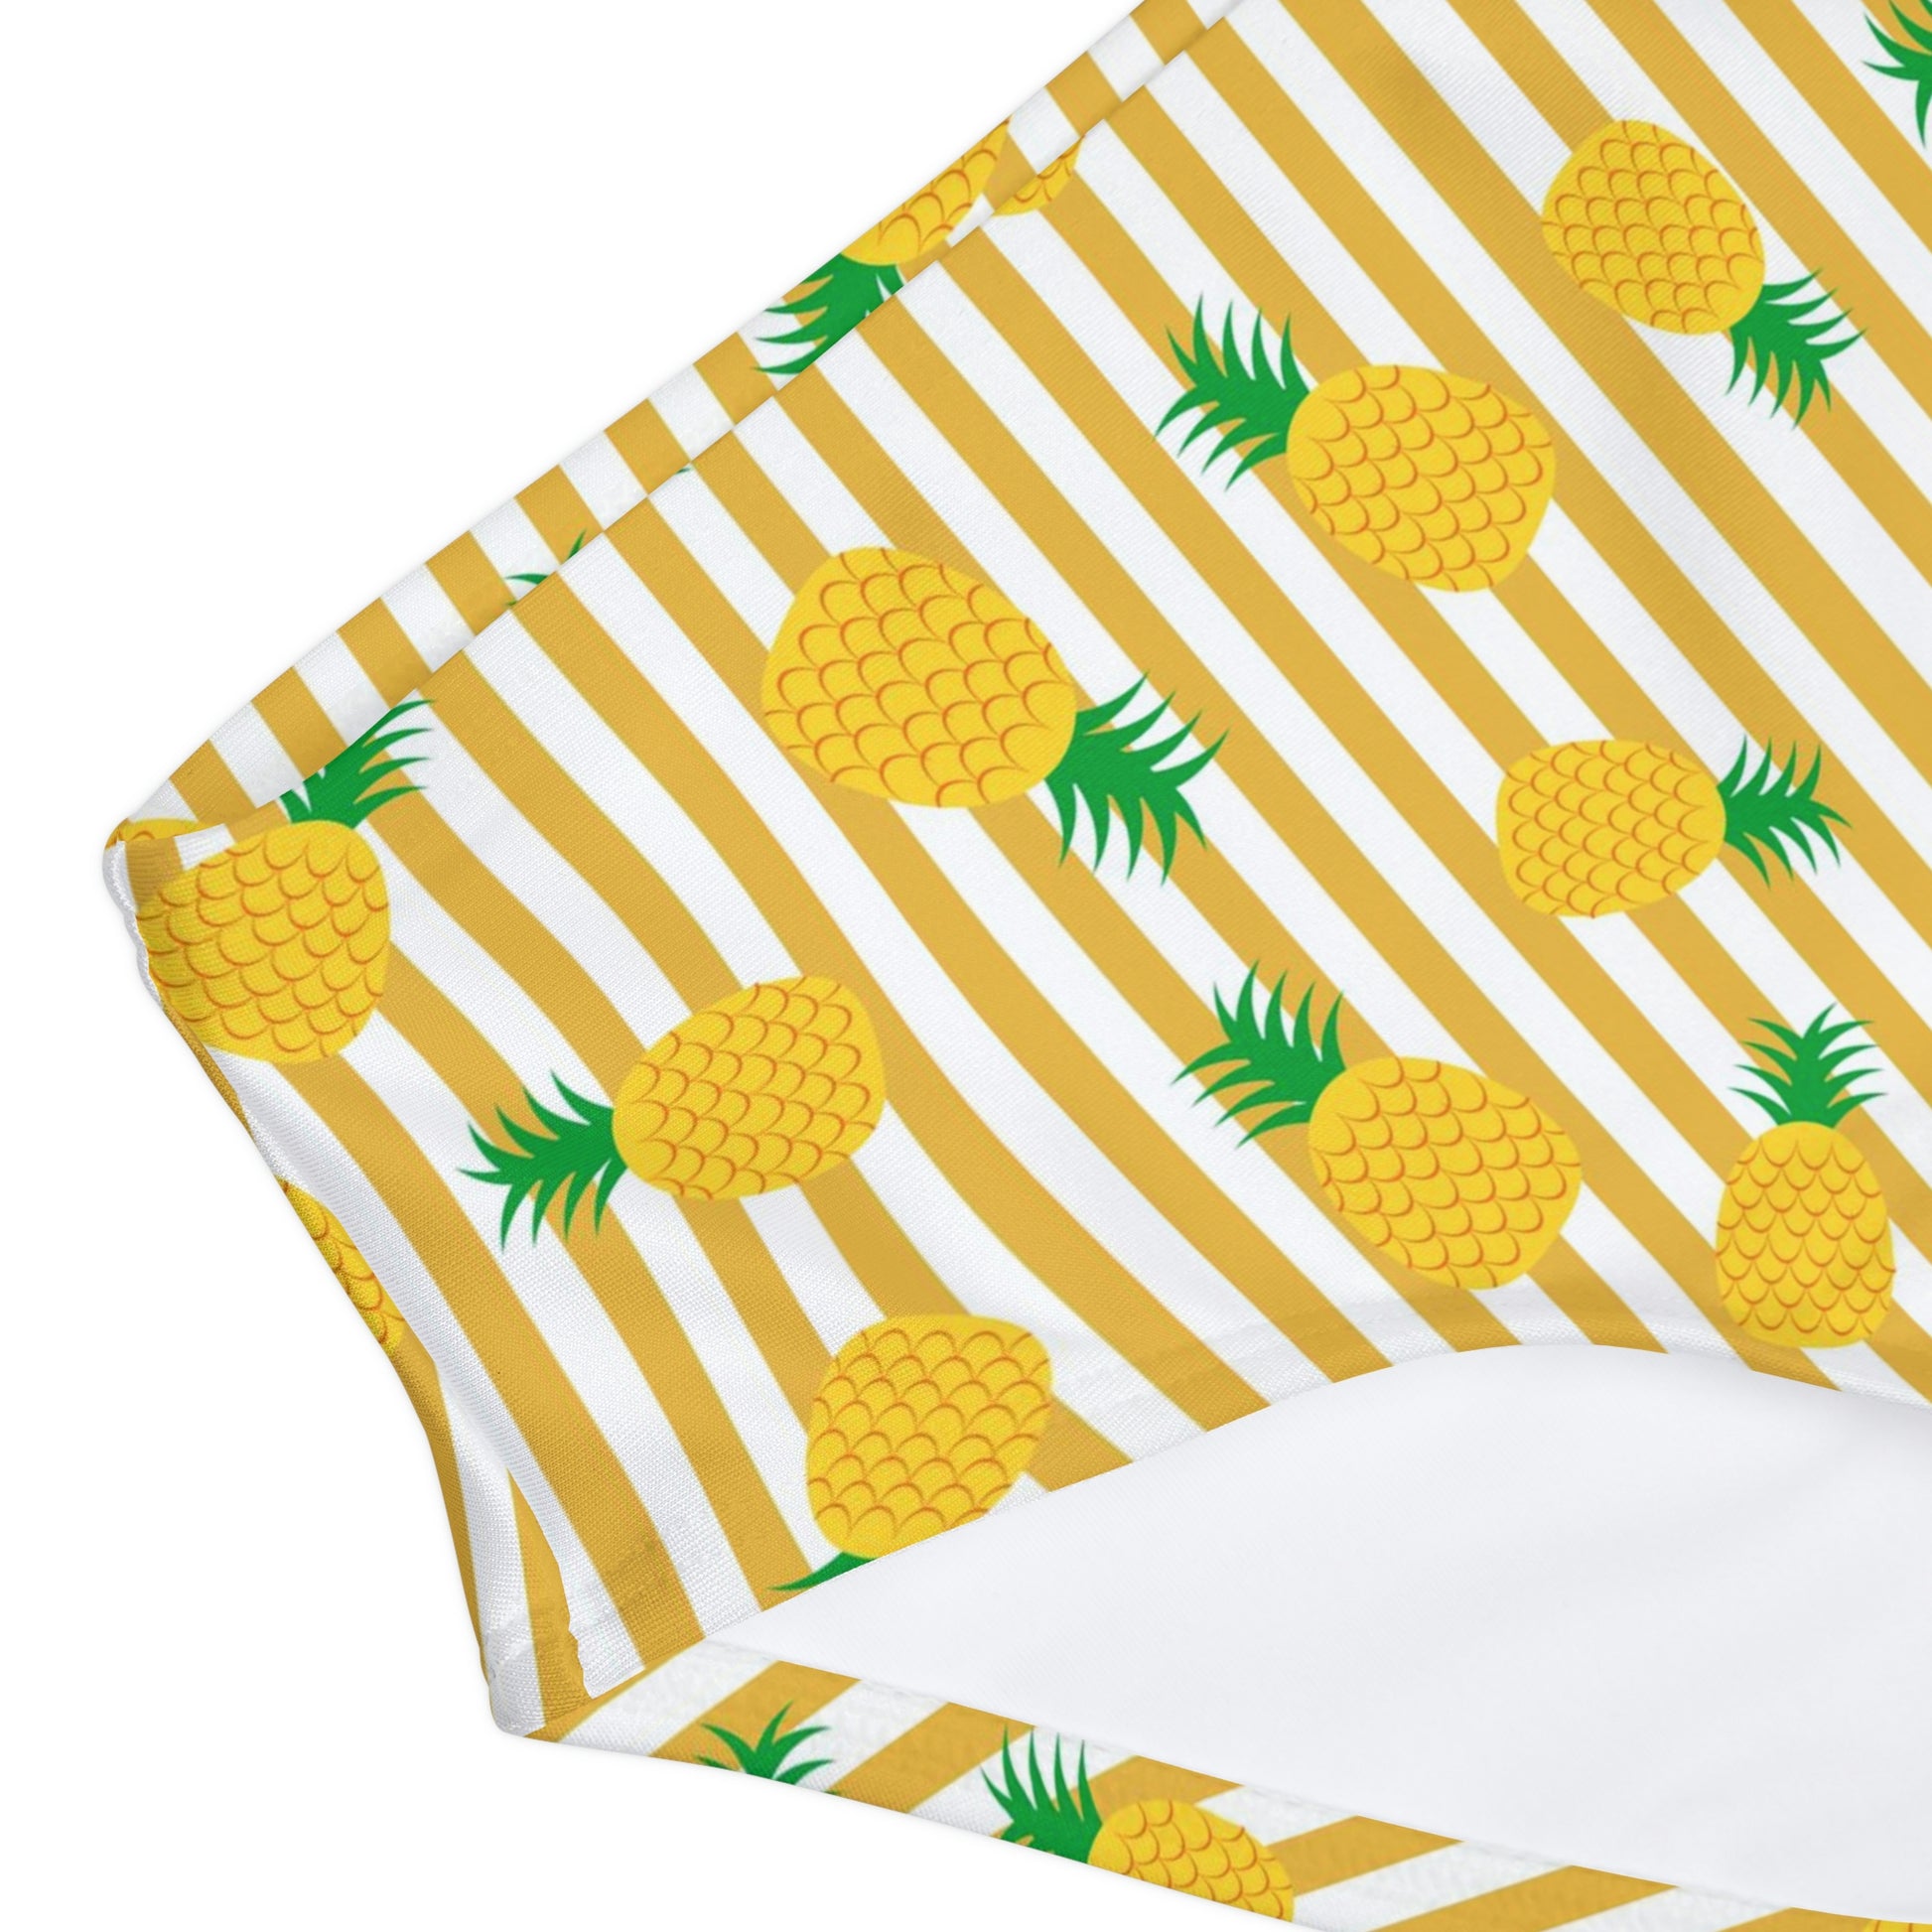 Pineapple Girls Bikini Set, Kids Teen Tween Summer Fruit Yellow Two Piece Beach Swimsuits Bathing Suit Youth Lined Top Swimwear Starcove Fashion